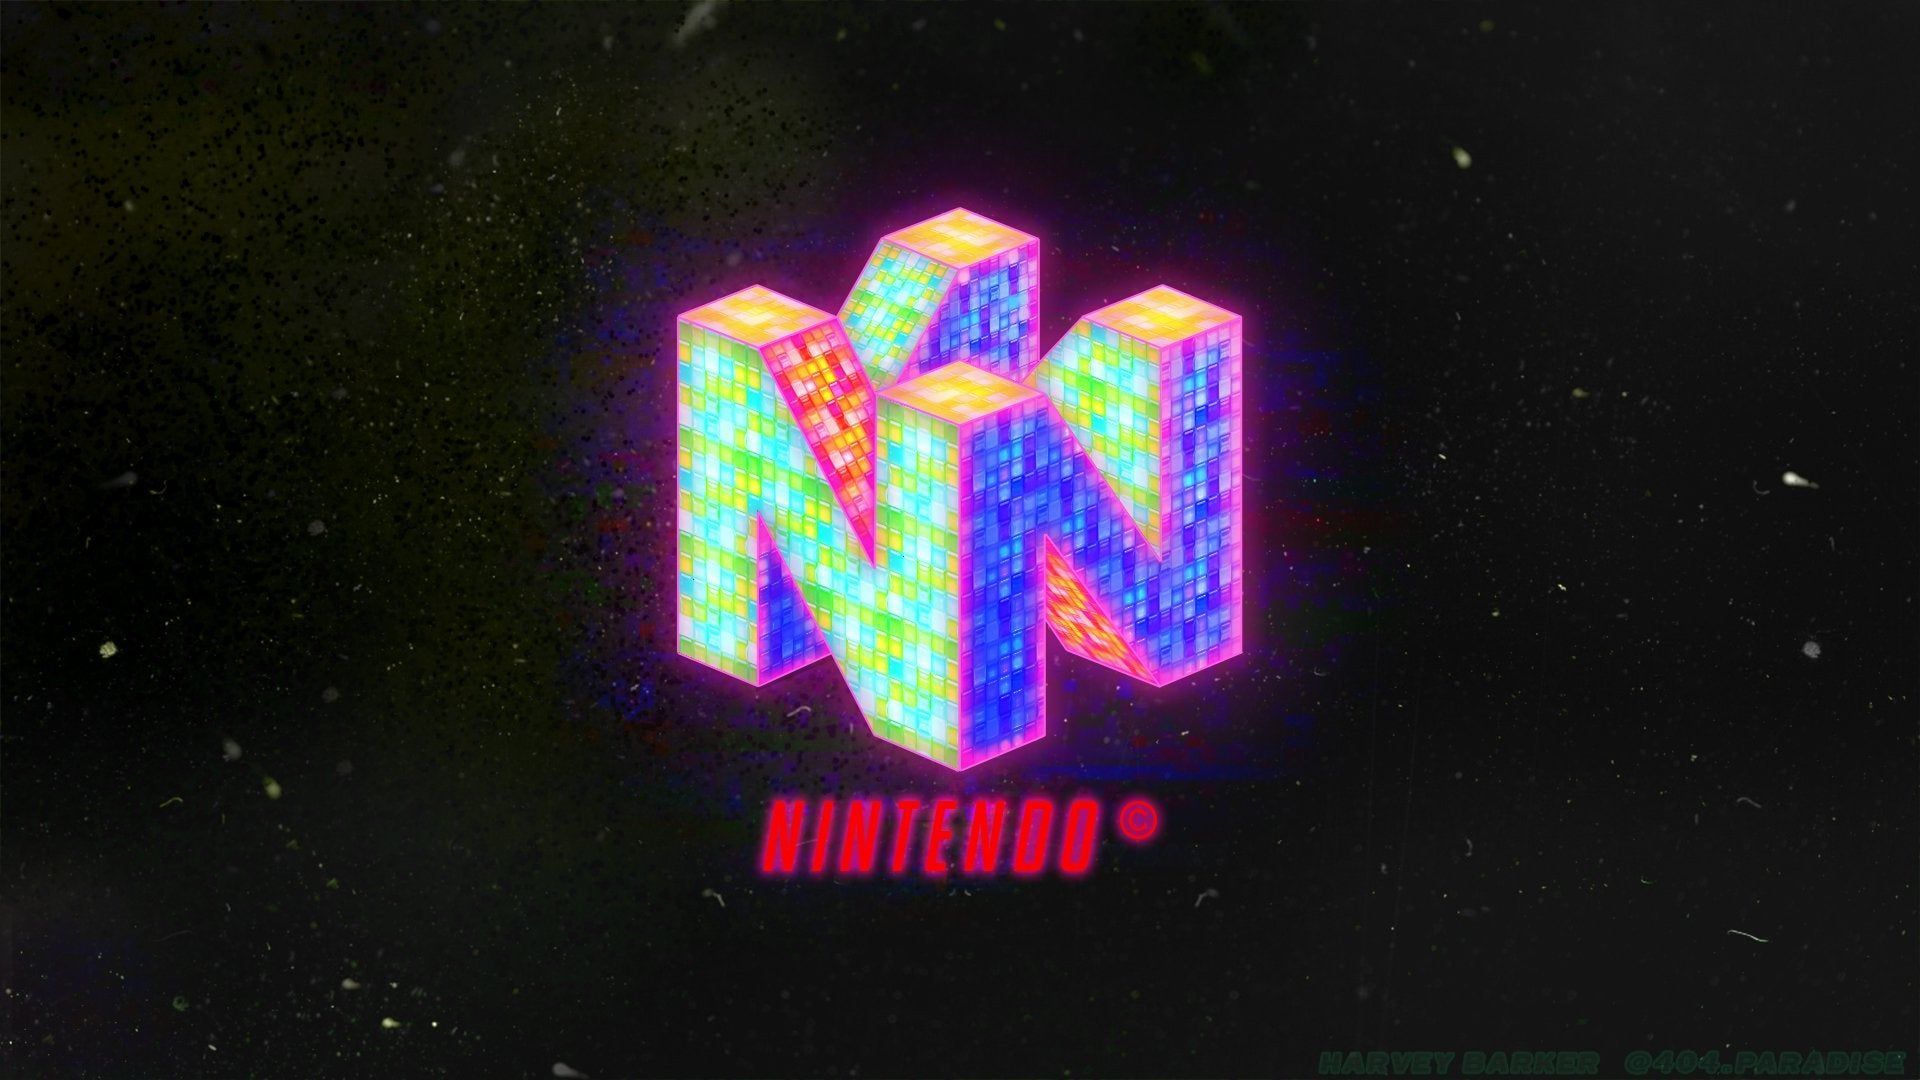 A neon, colorful, and artistic wallpaper of the Nintendo 64 logo - Nintendo